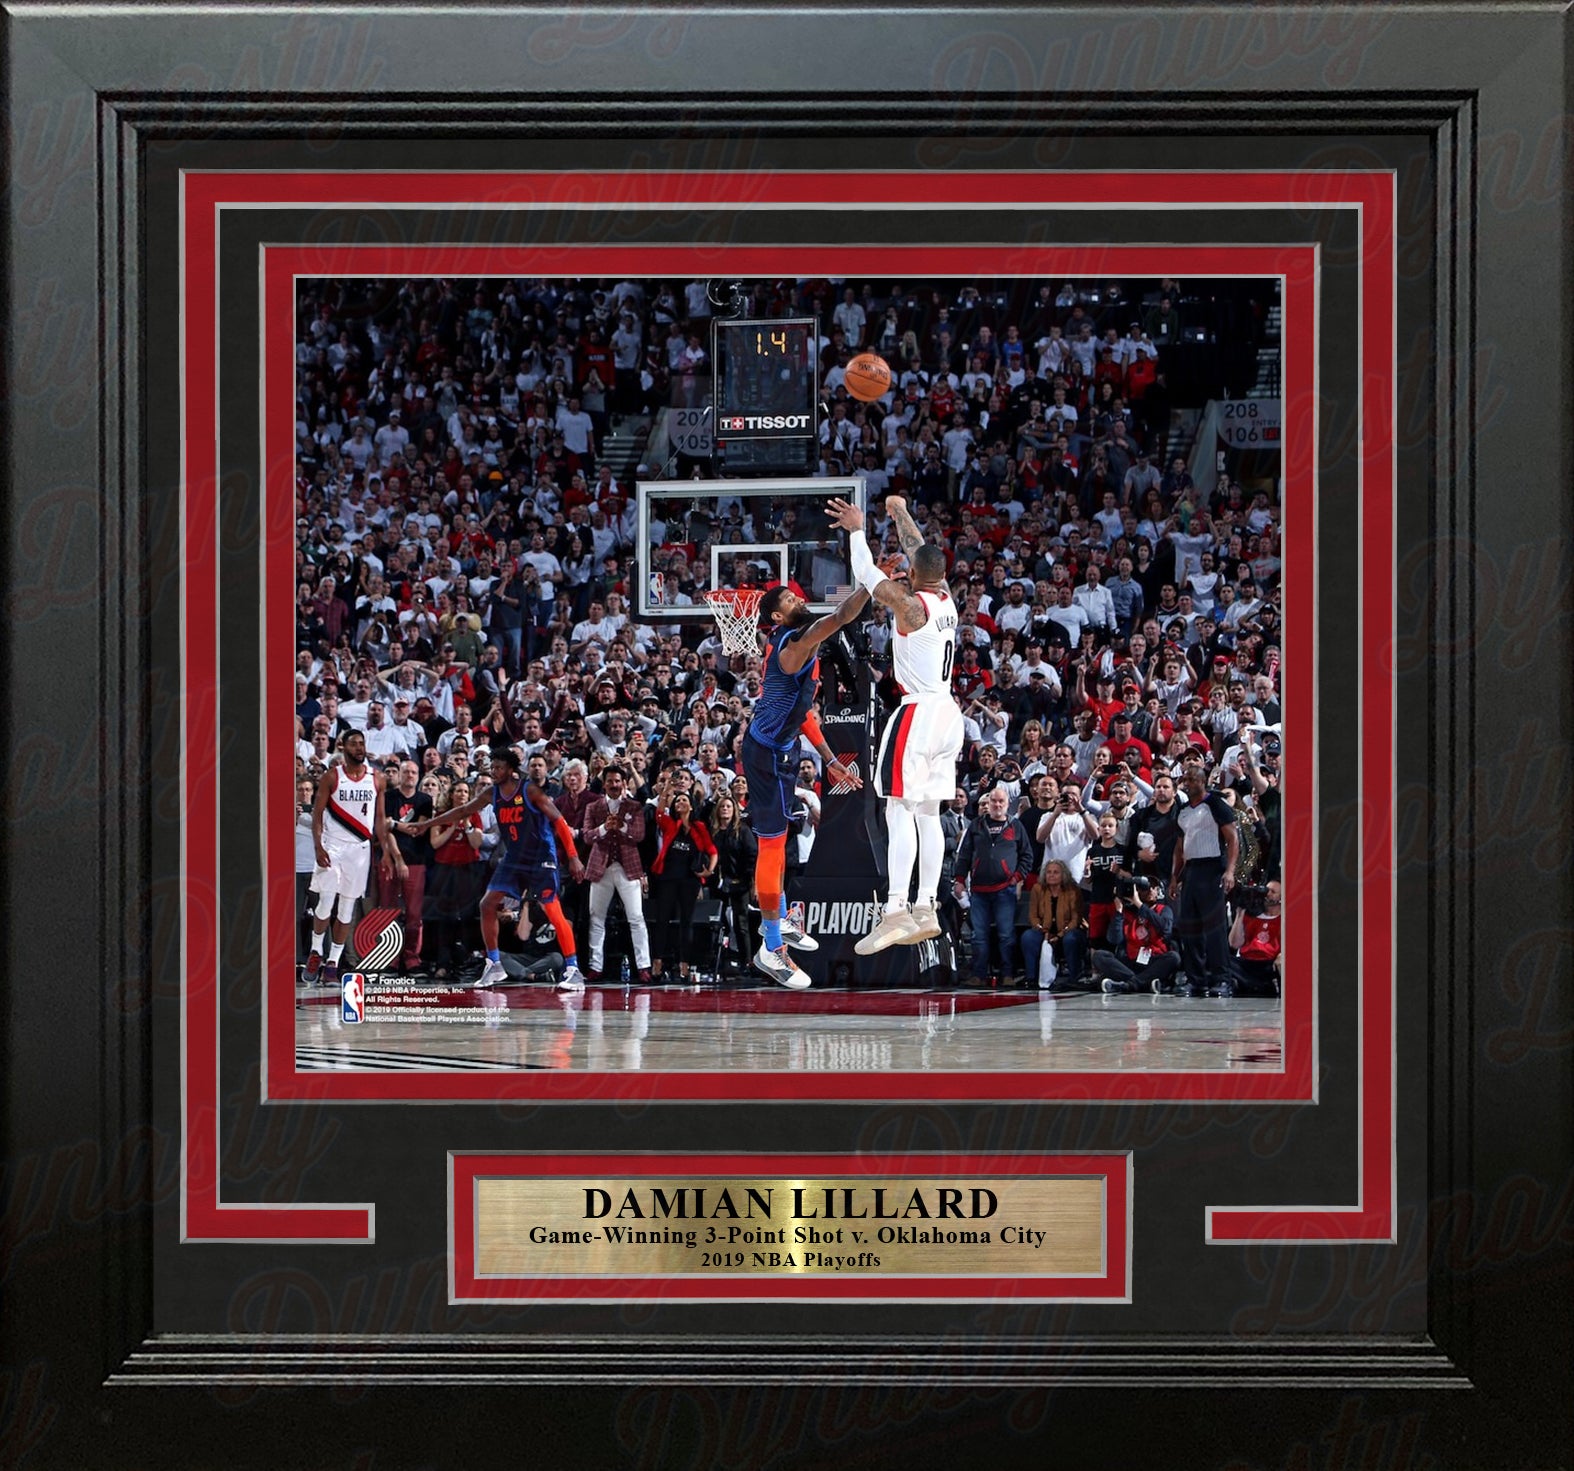 Damian Lillard Portland Trail Blazers Game-Winning 3-Point Shot v. Oklahoma City 8" x 10" Framed Basketball Photo - Dynasty Sports & Framing 